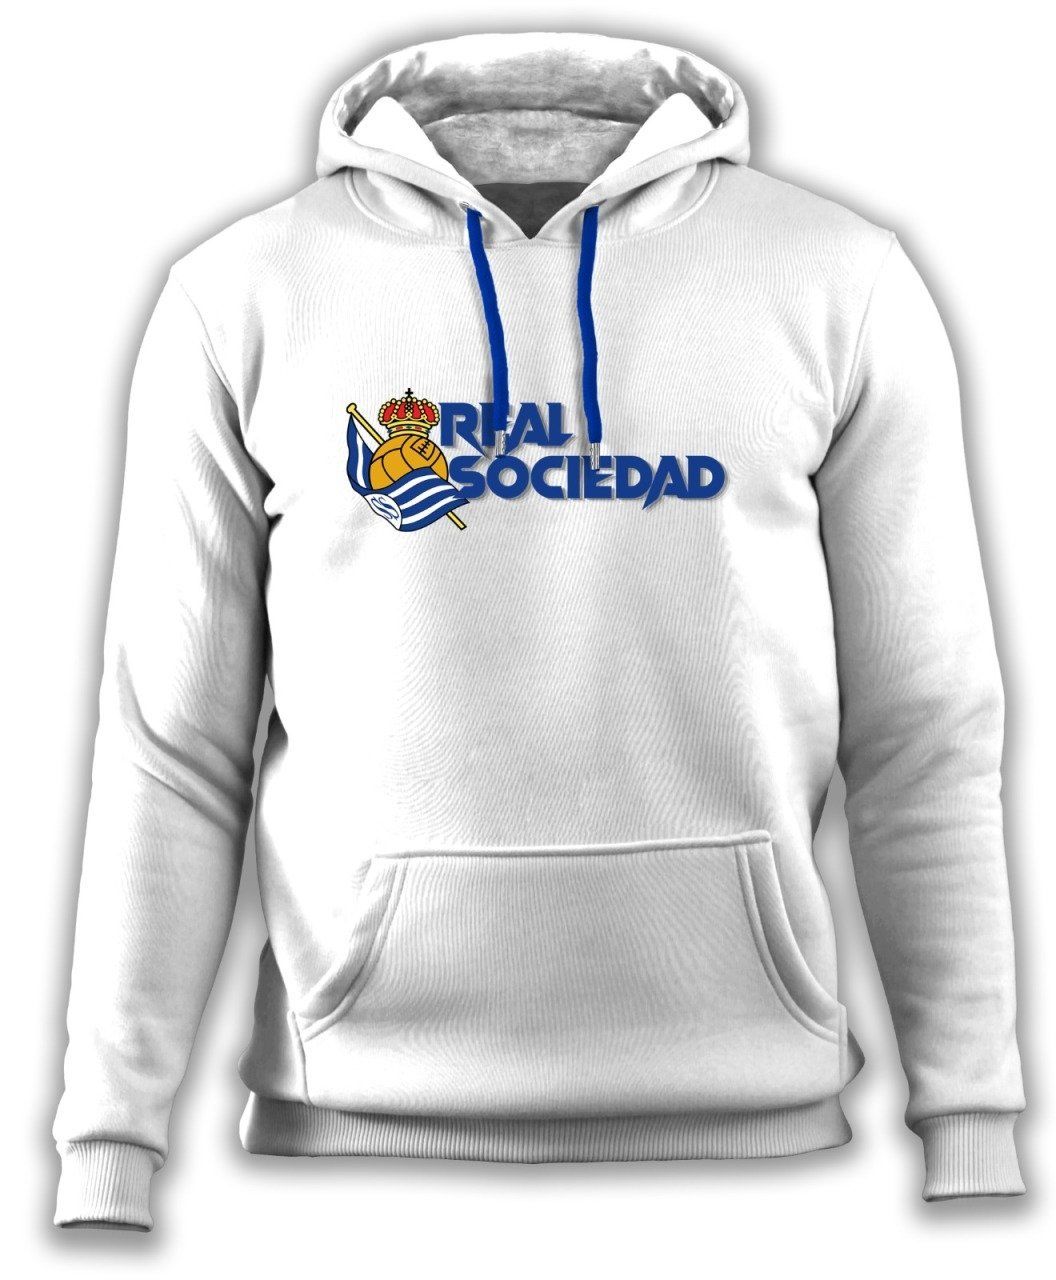 Real Sociedad Sweatshirt